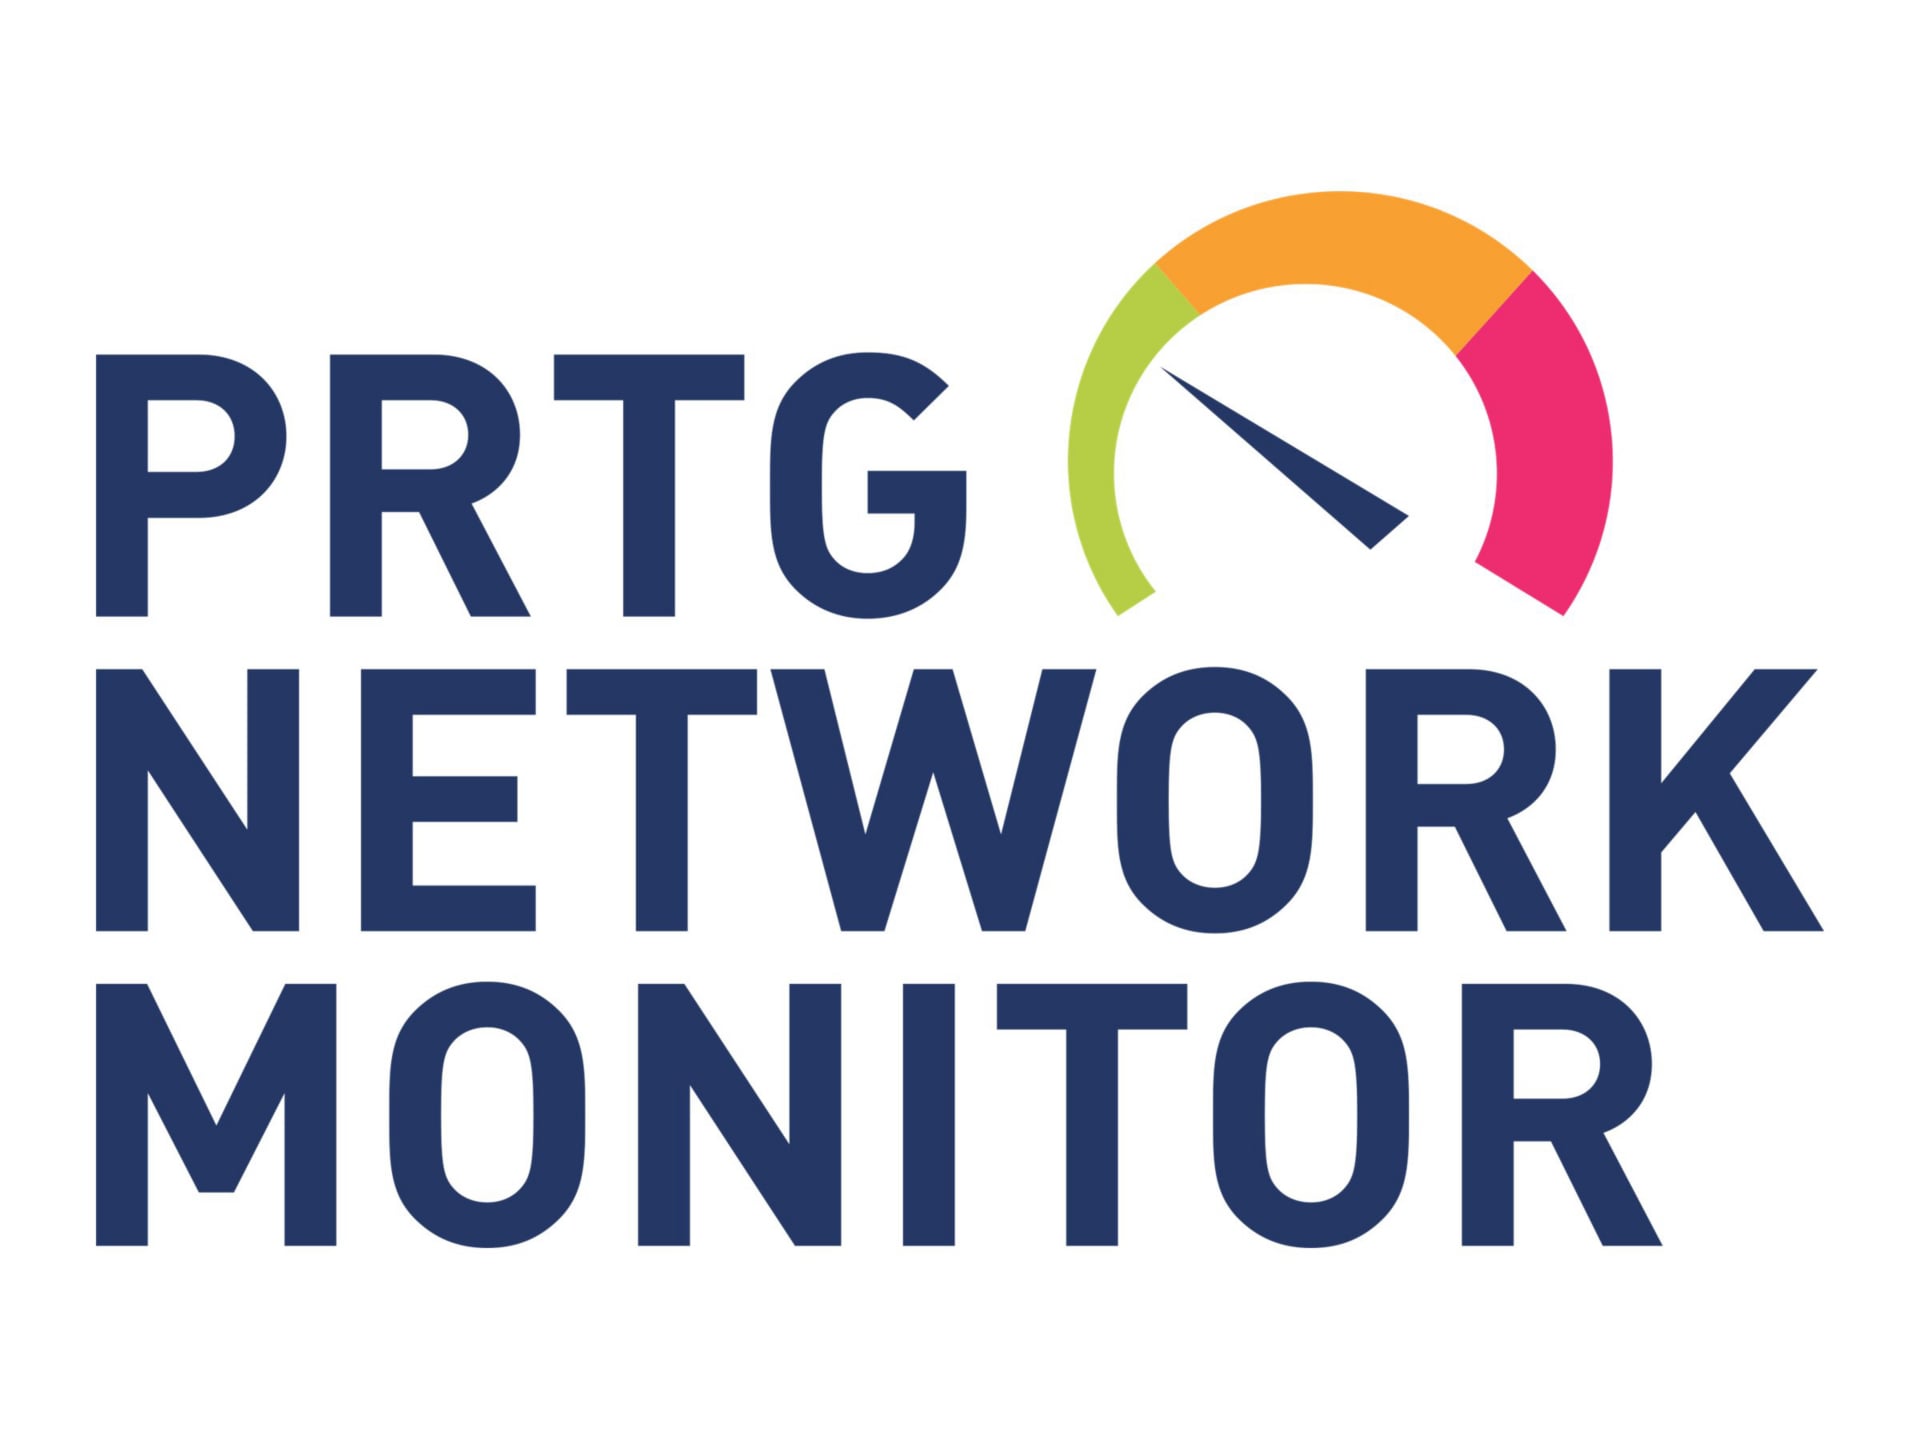 PRTG Network Monitor 2500 - upgrade license + 3 Years Maintenance - 2500 se